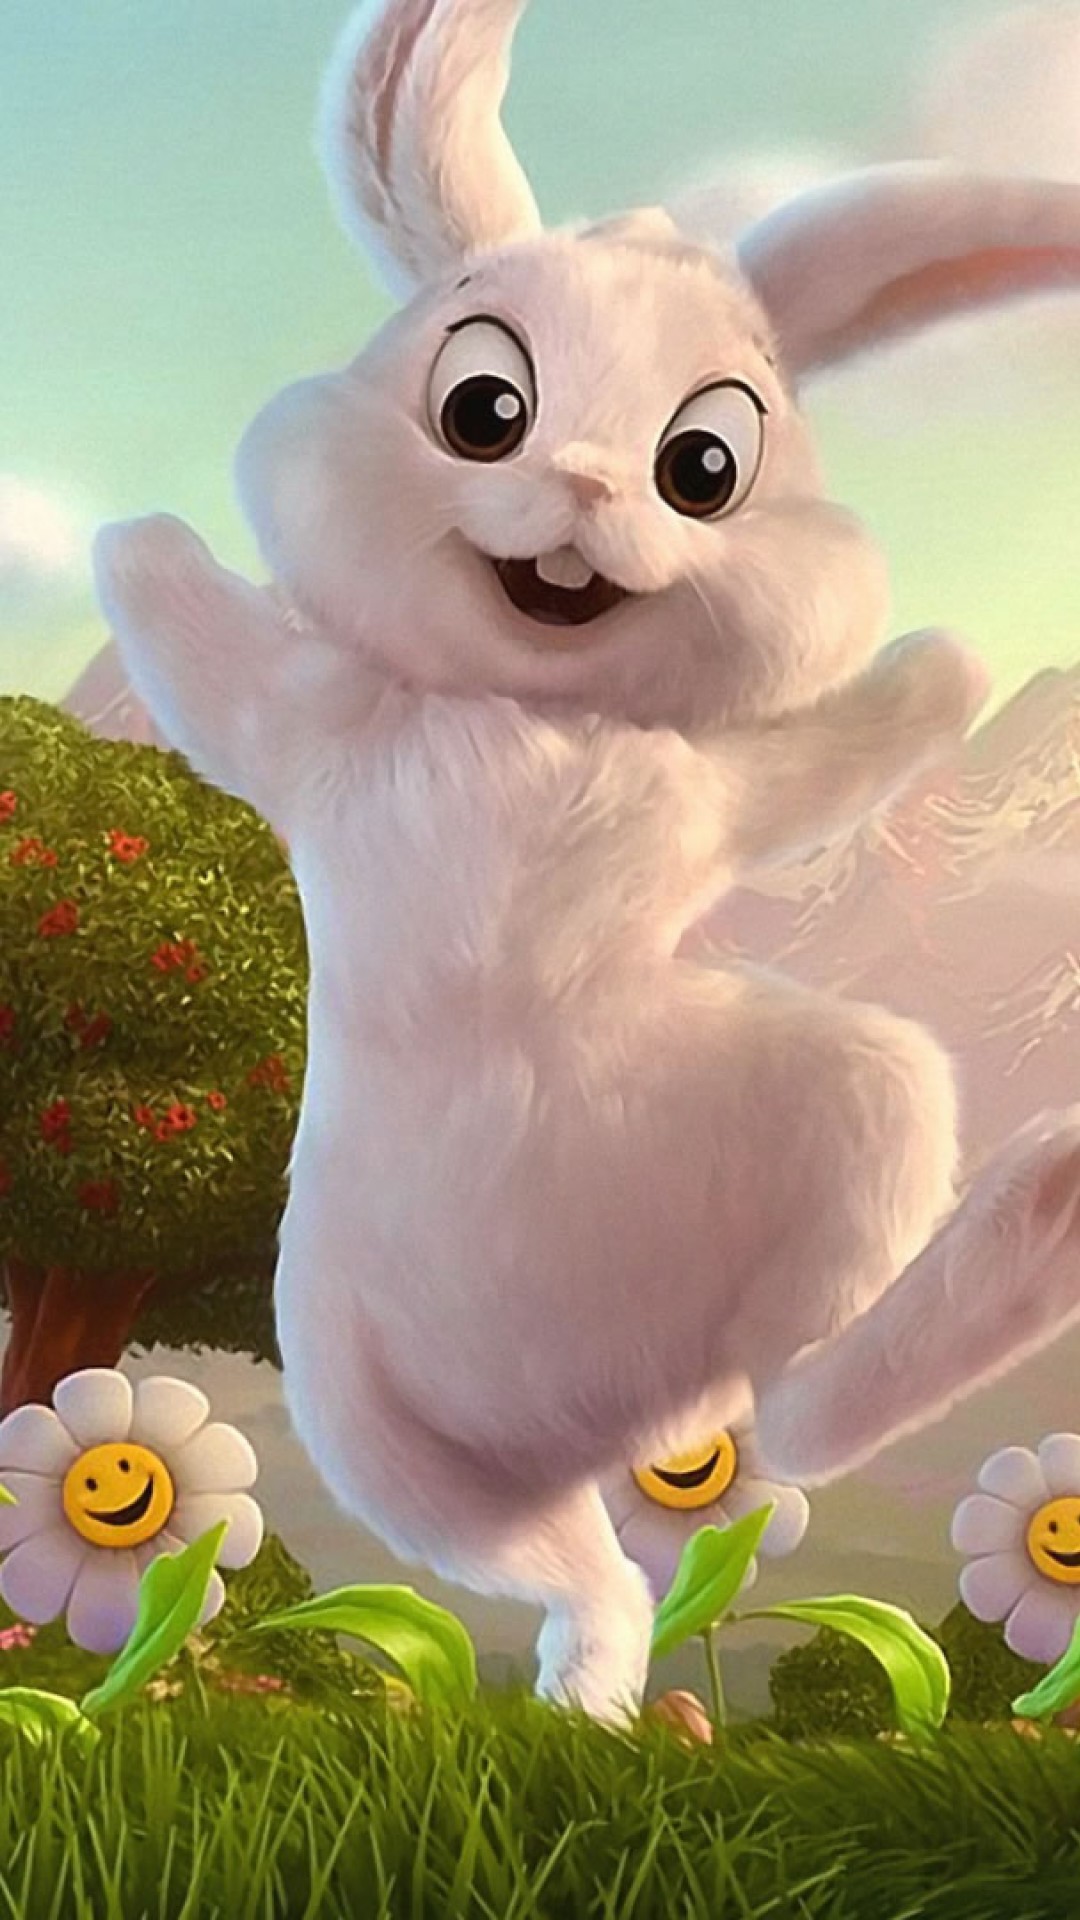 Cute Bugs Bunny White Rabbit Cartoon Wallpaper for Desktop and Mobiles  iPhone 6 / 6S Plus - HD Wallpaper 